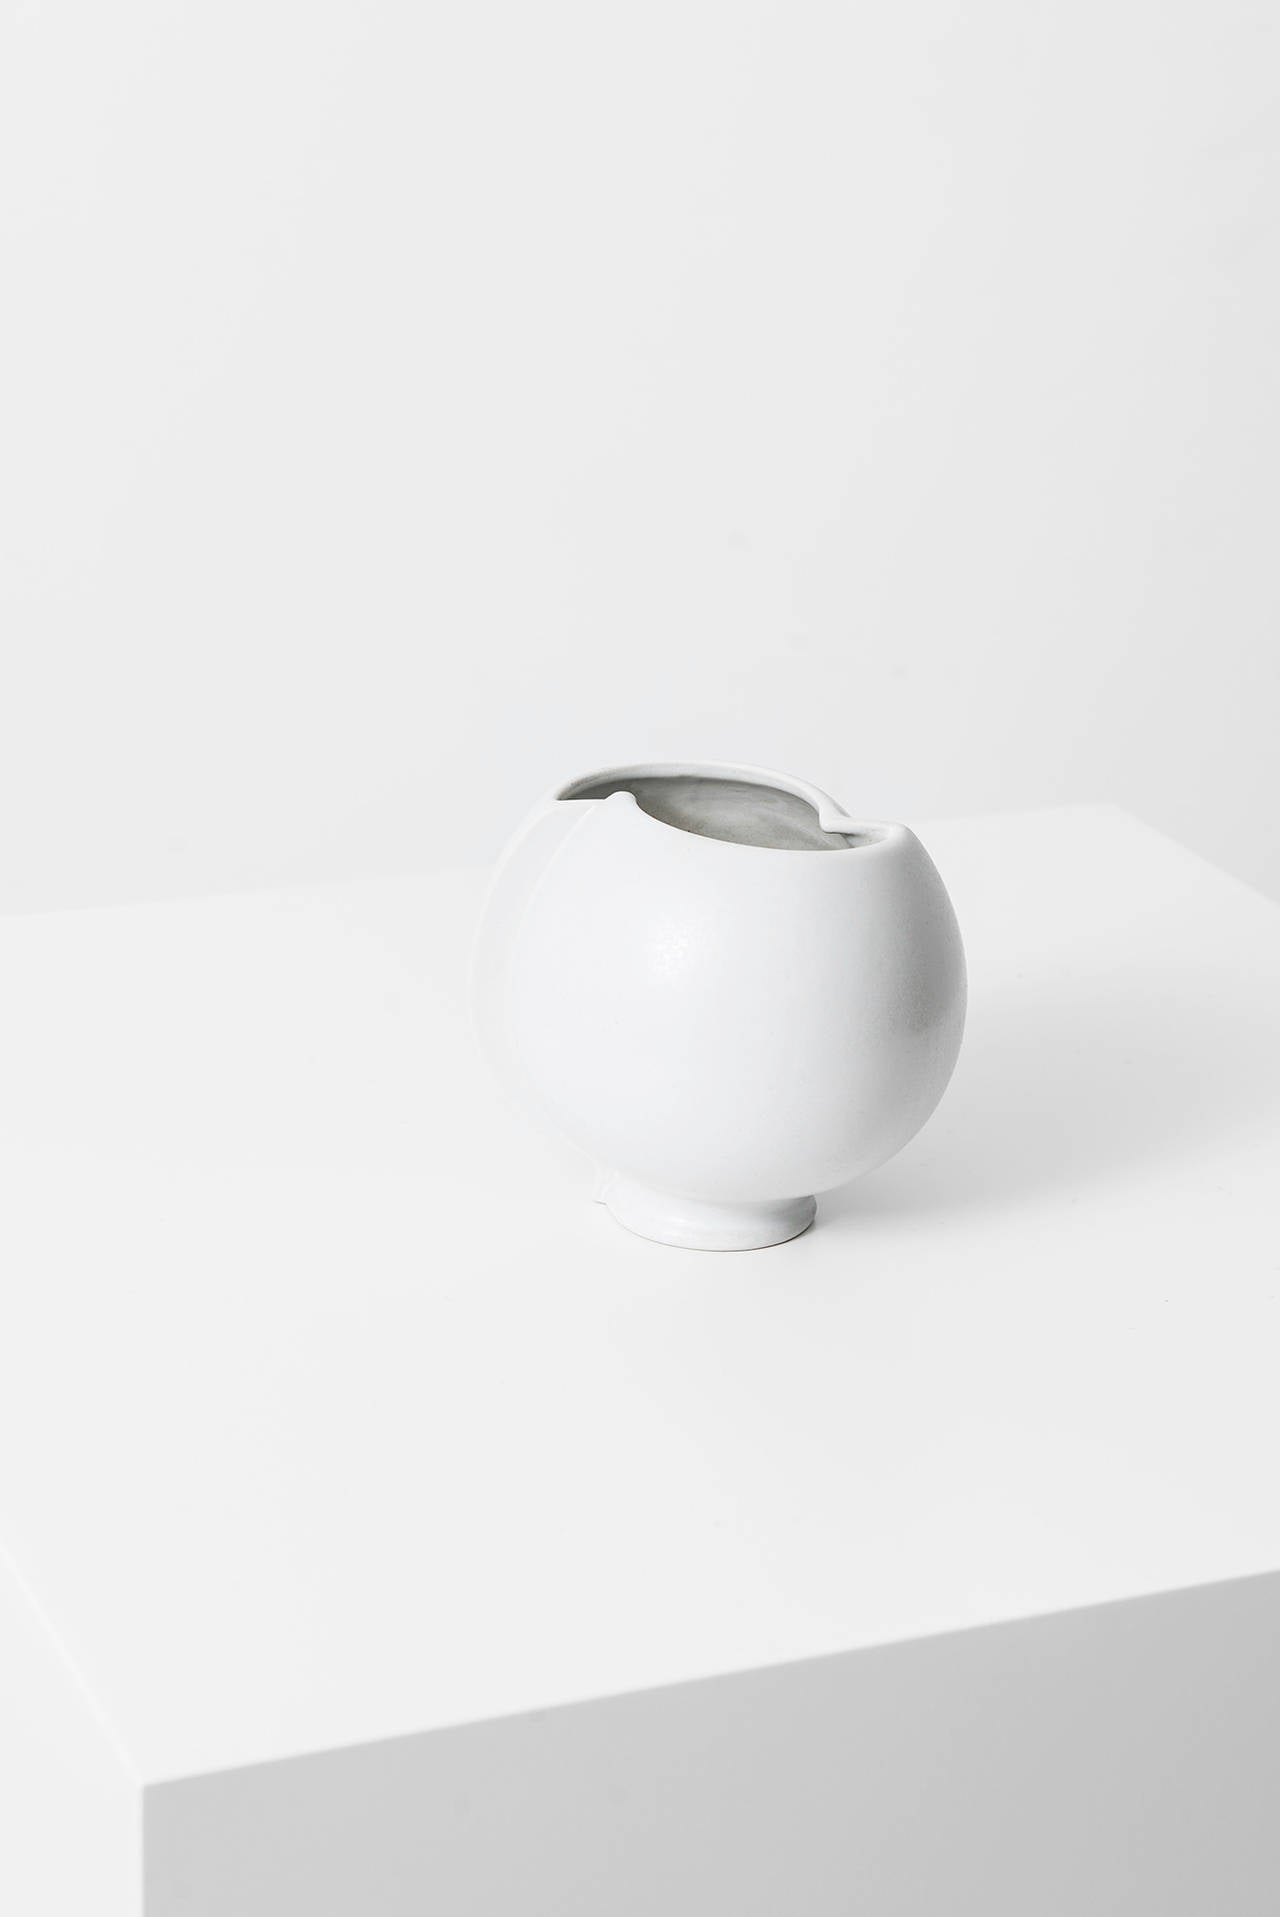 Stoneware vase model Surrea designed by Wilhelm Kåge. Produced by Gustavsberg in Sweden.